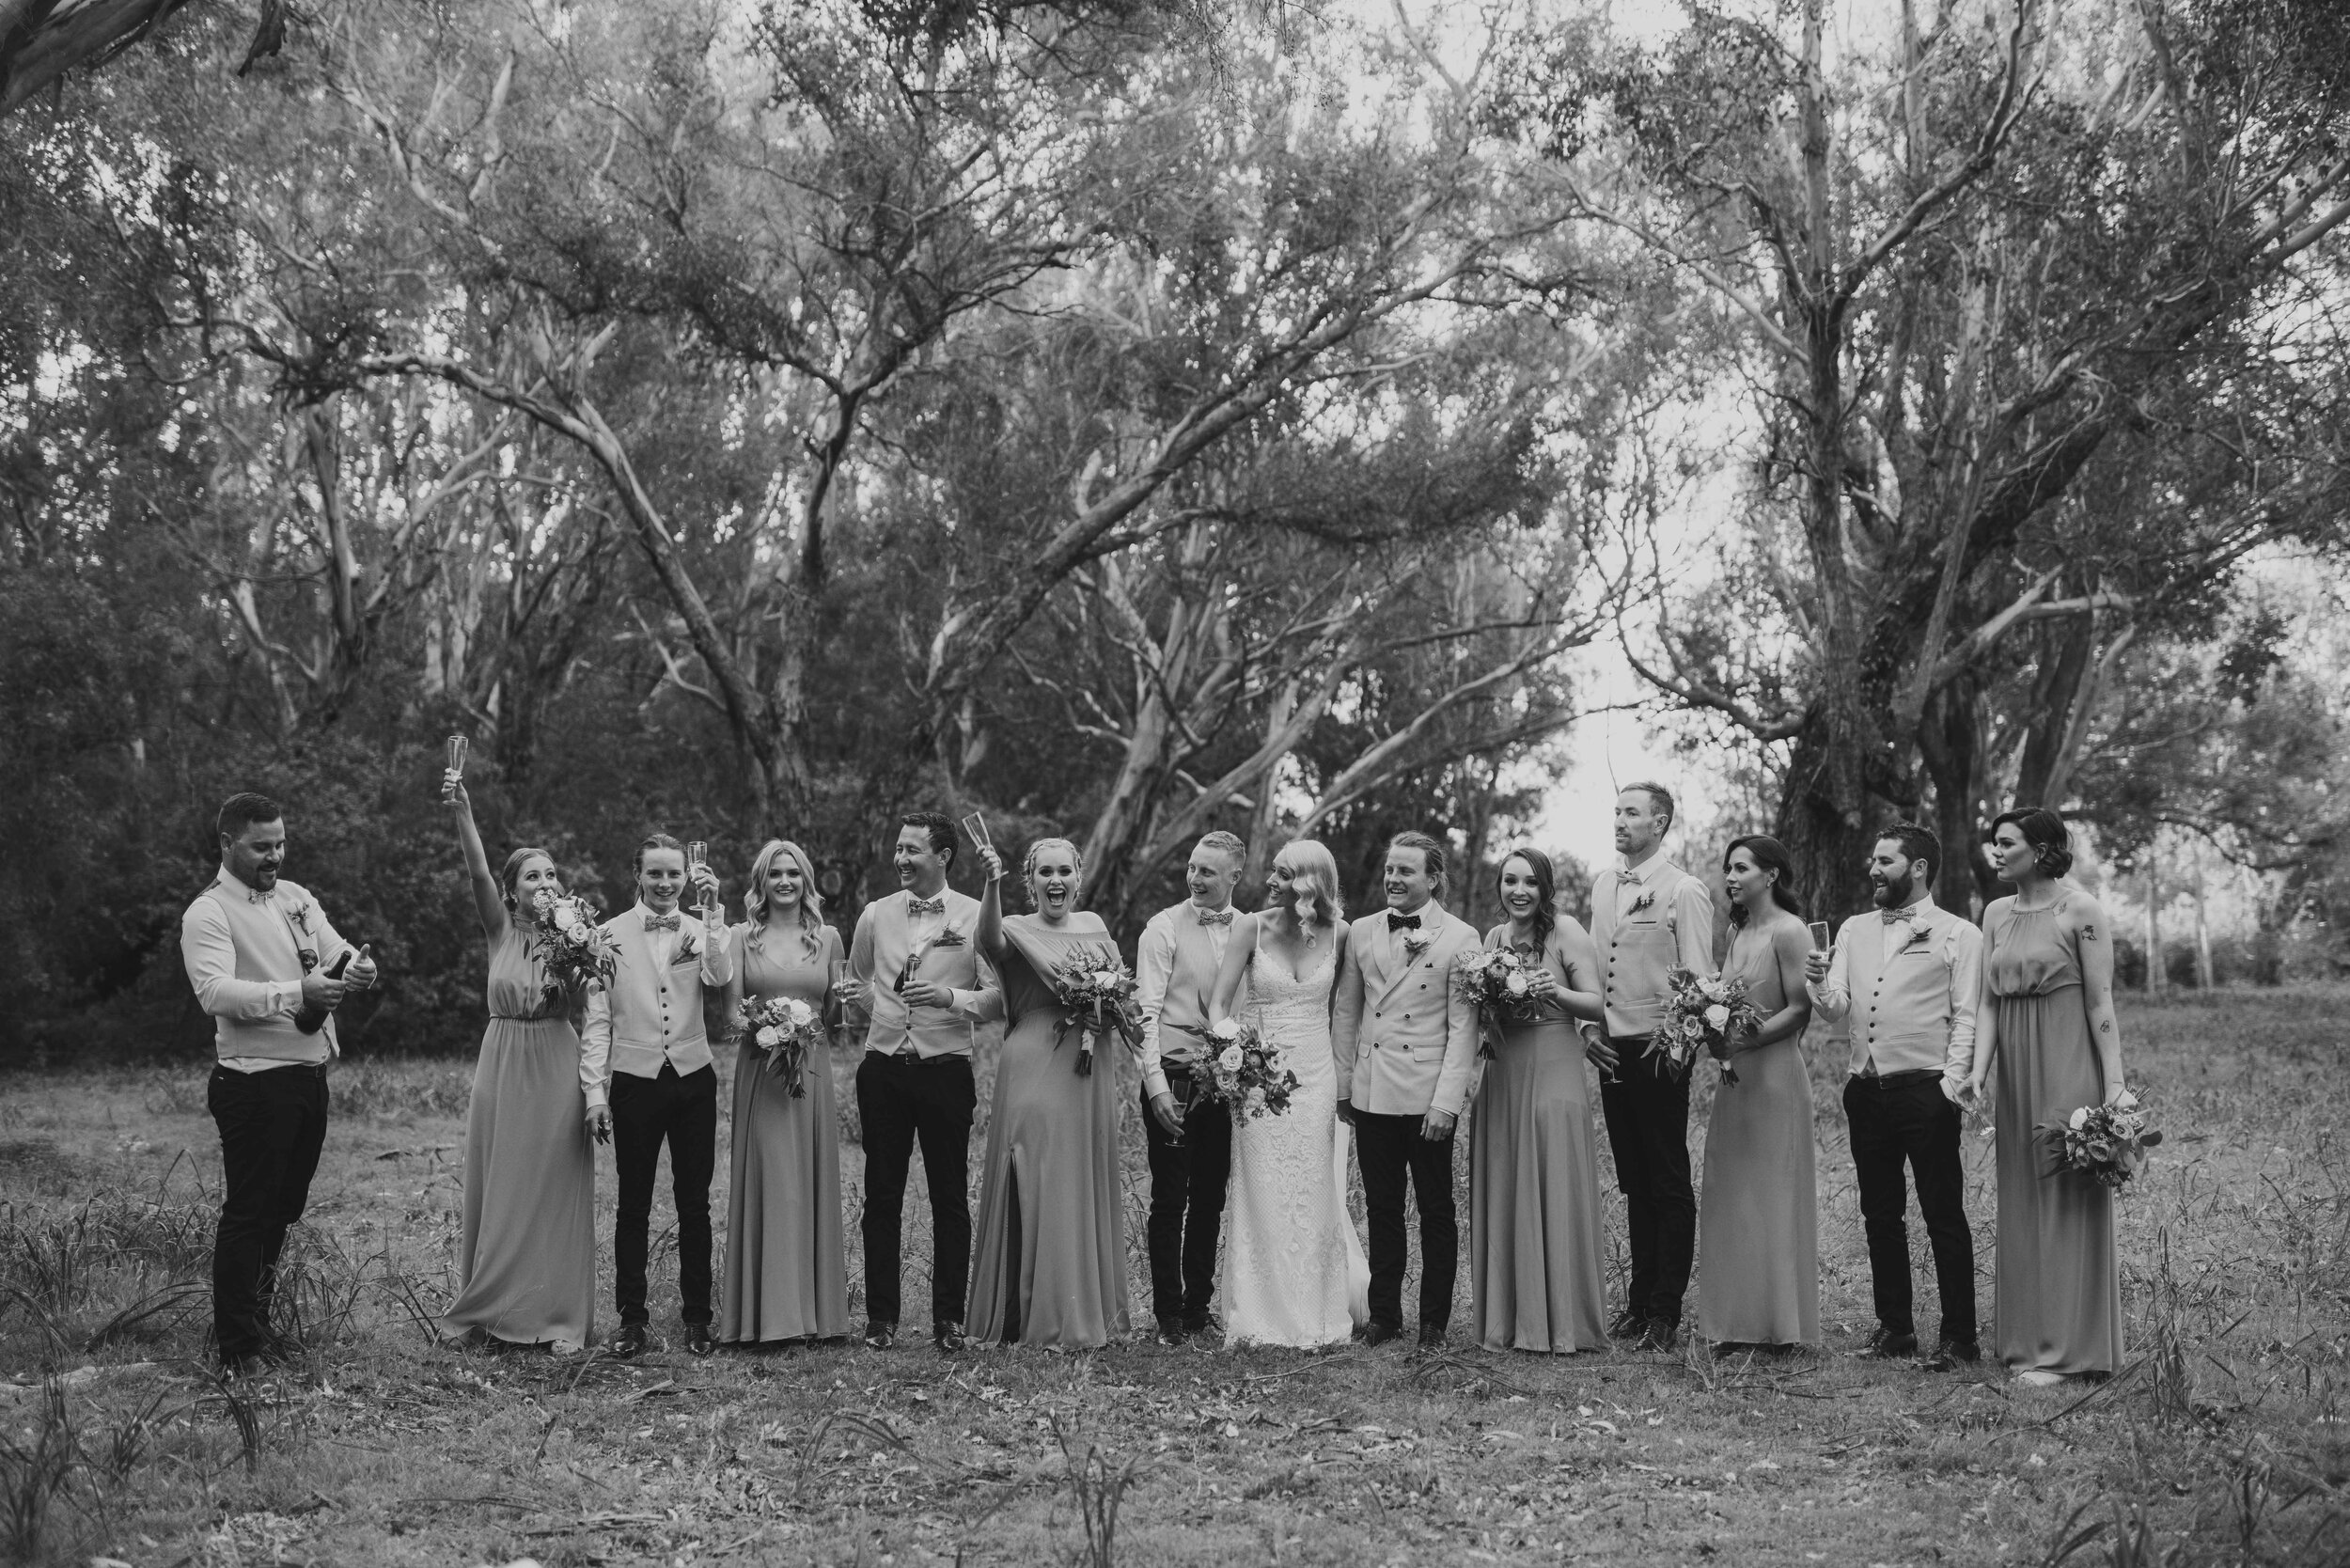 Yanchep park beautiful spring wedding | Perth wedding photographer Amy Skinner-613.jpg